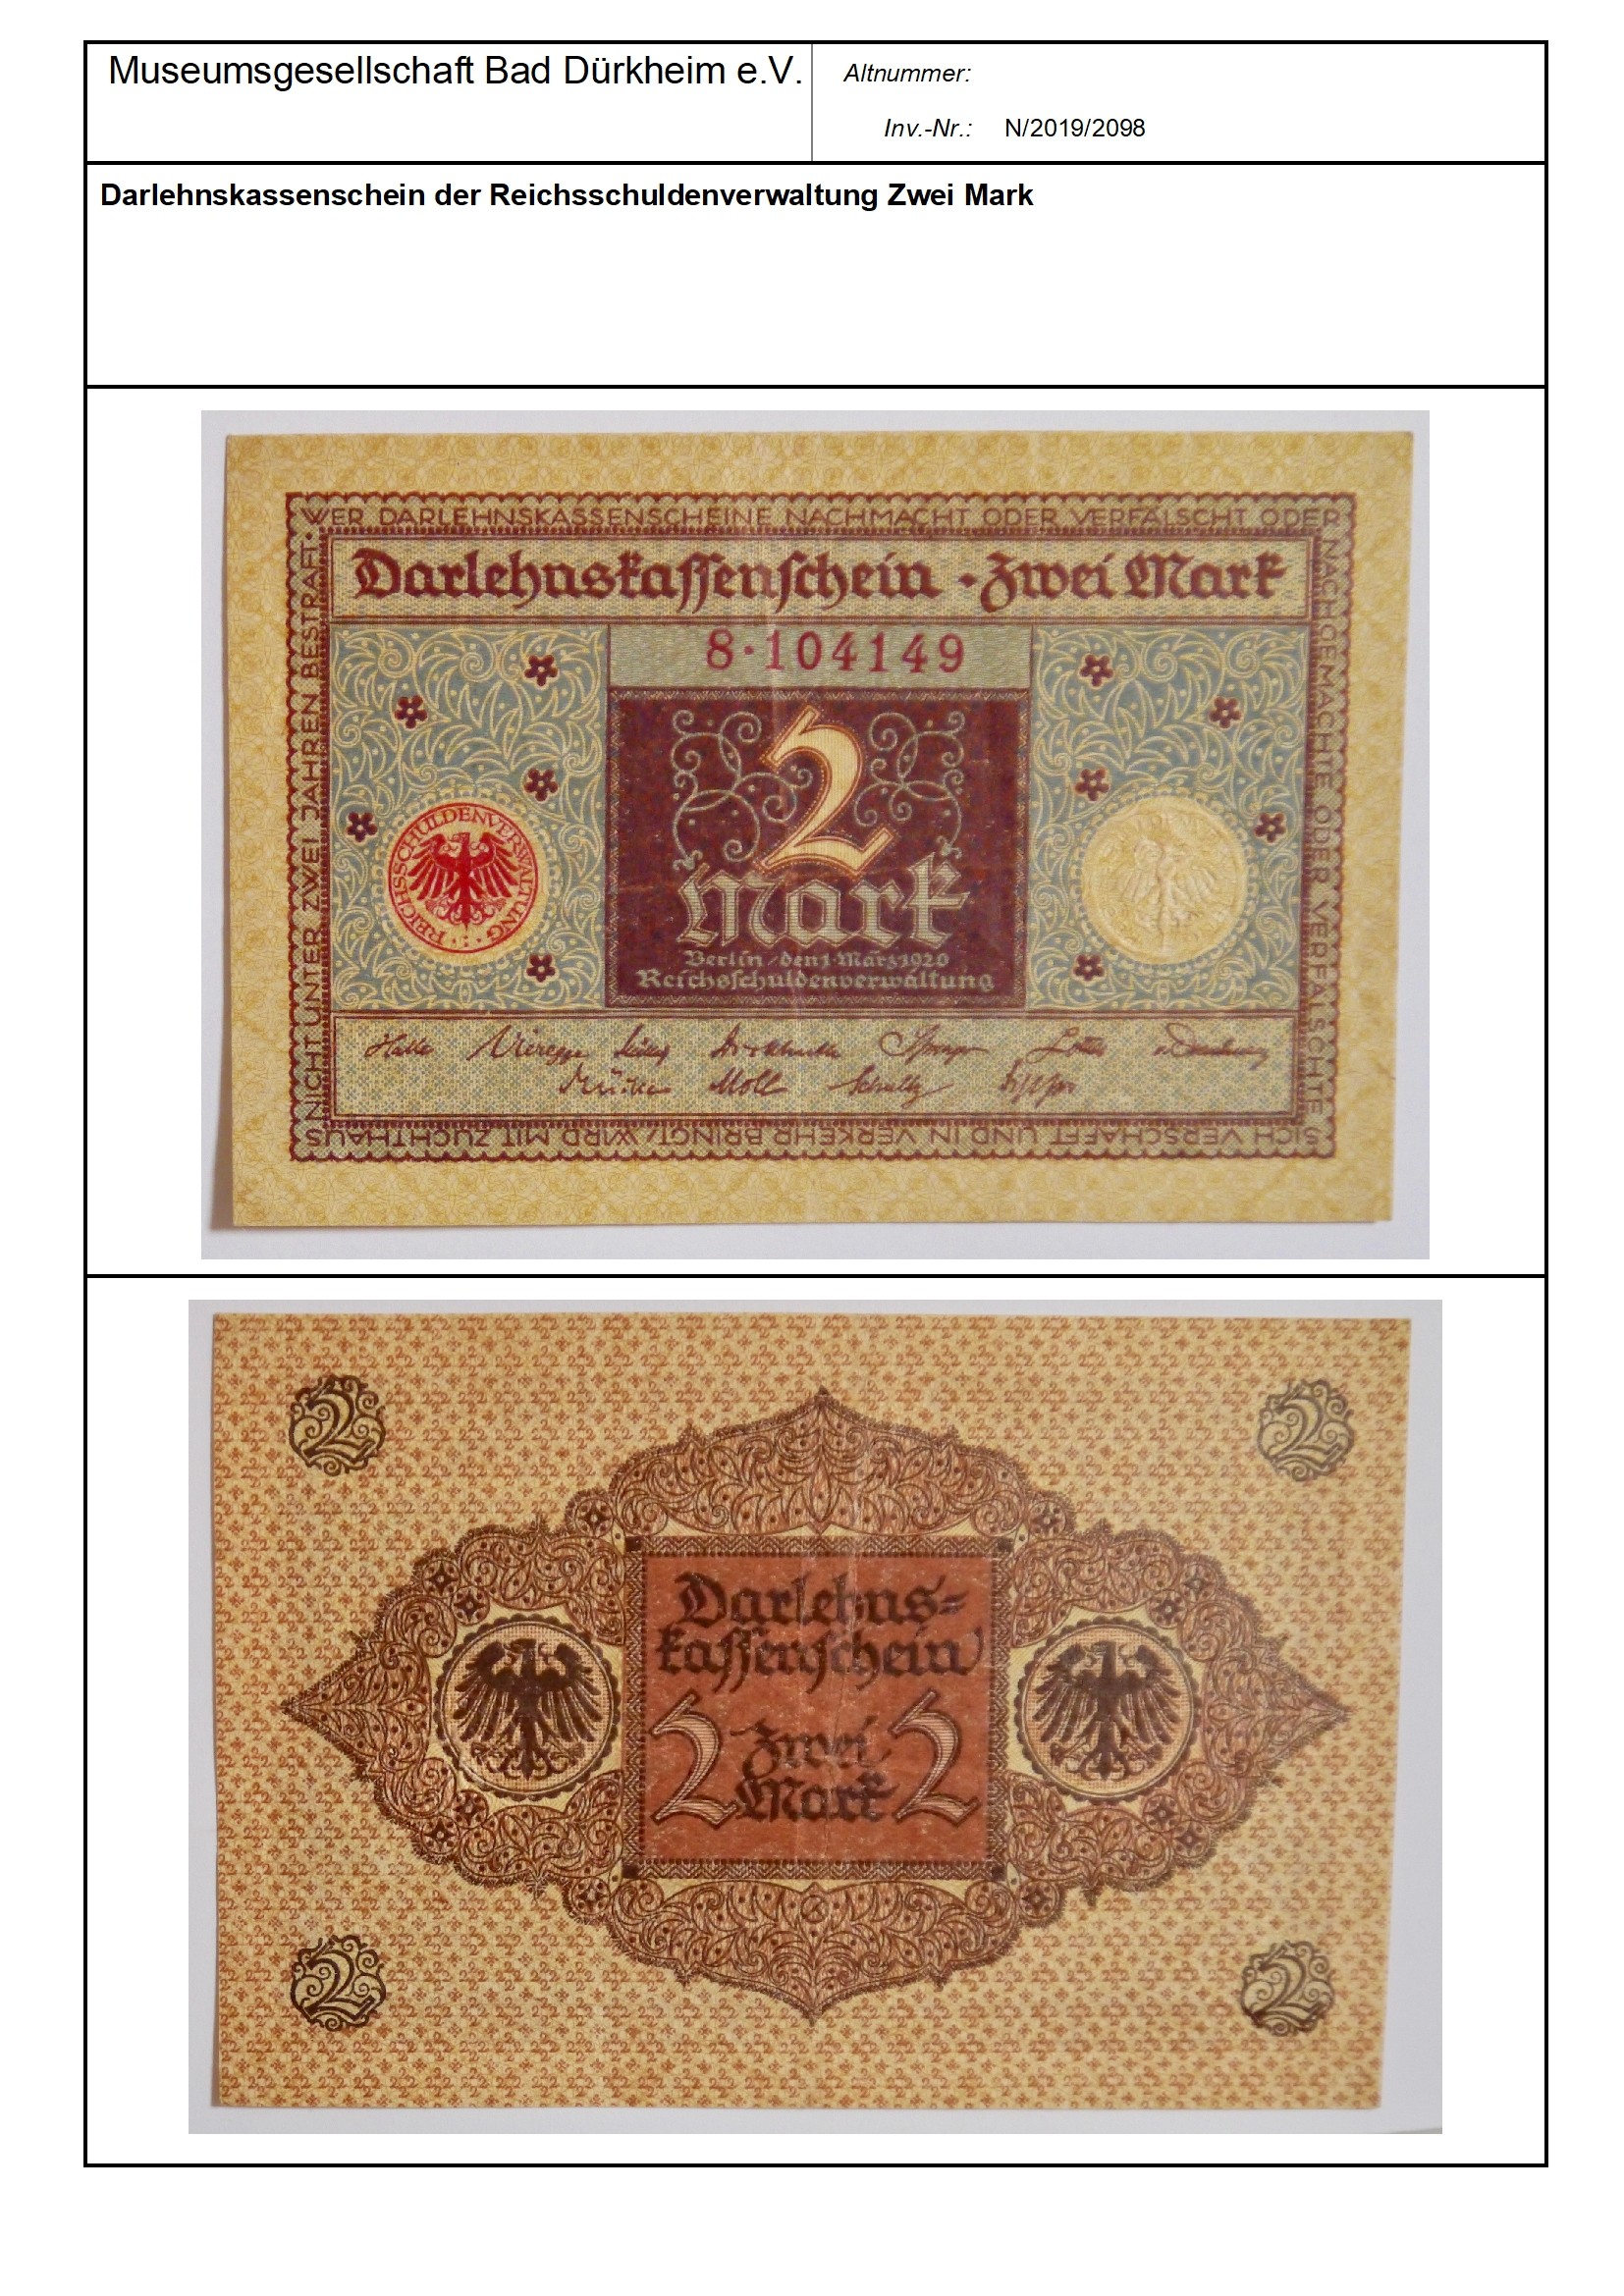 Darlehnskassenschein der Reichsschuldenverwaltung Zwei Mark
Serien-Nummer: 8*104149 (Museumsgesellschaft Bad Dürkheim e.V. CC BY-NC-SA)